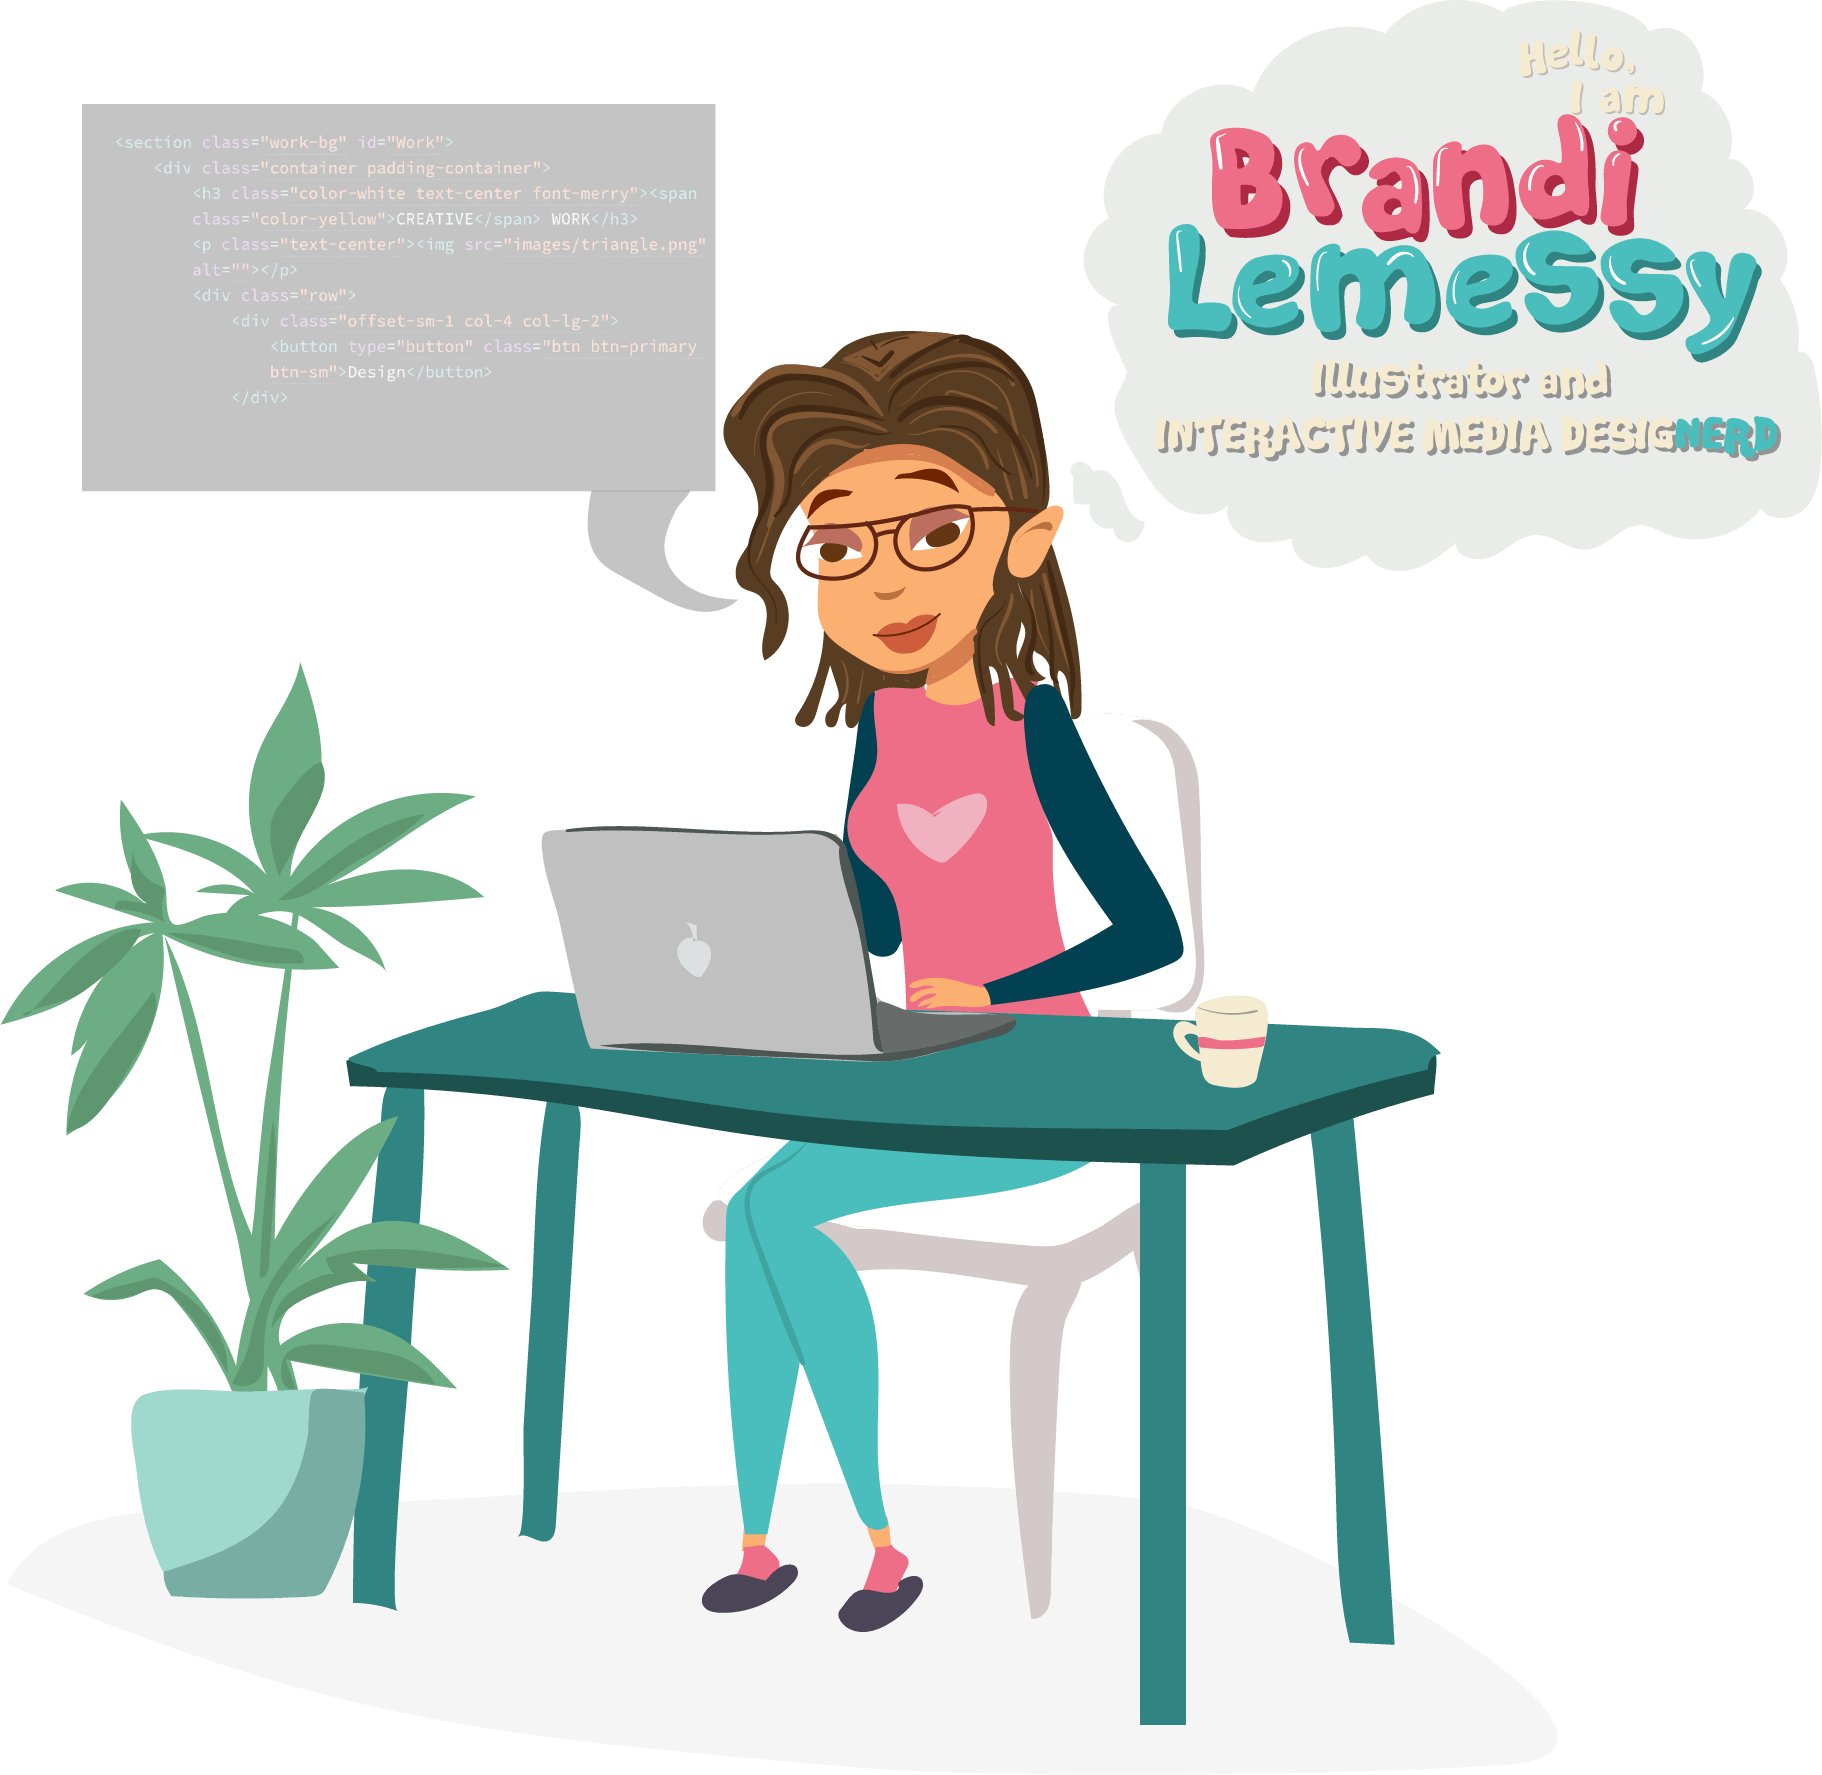 Cartoon image of Brandi Lemessy sitting at a work desk with a thought bubble Hello I am Brandi Lemessy, Illustrator and DesigNERD